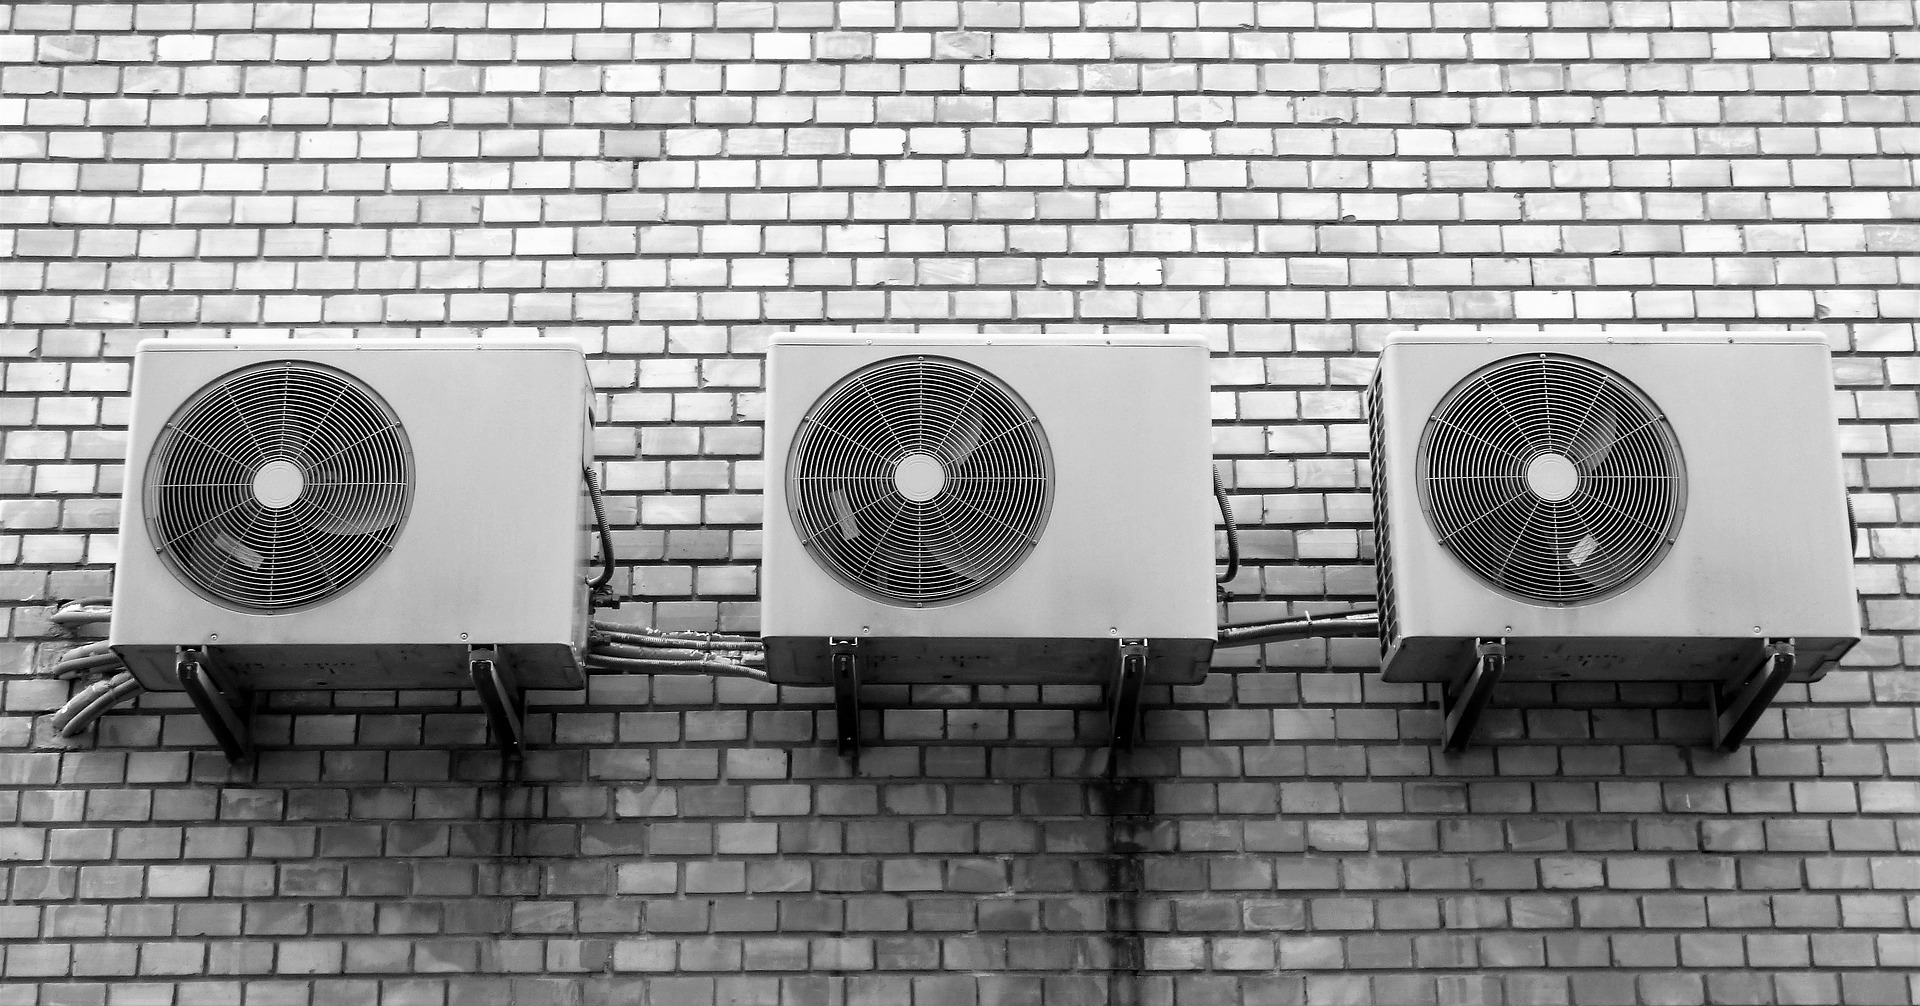 photograph of three AC units mounted on a brick wall